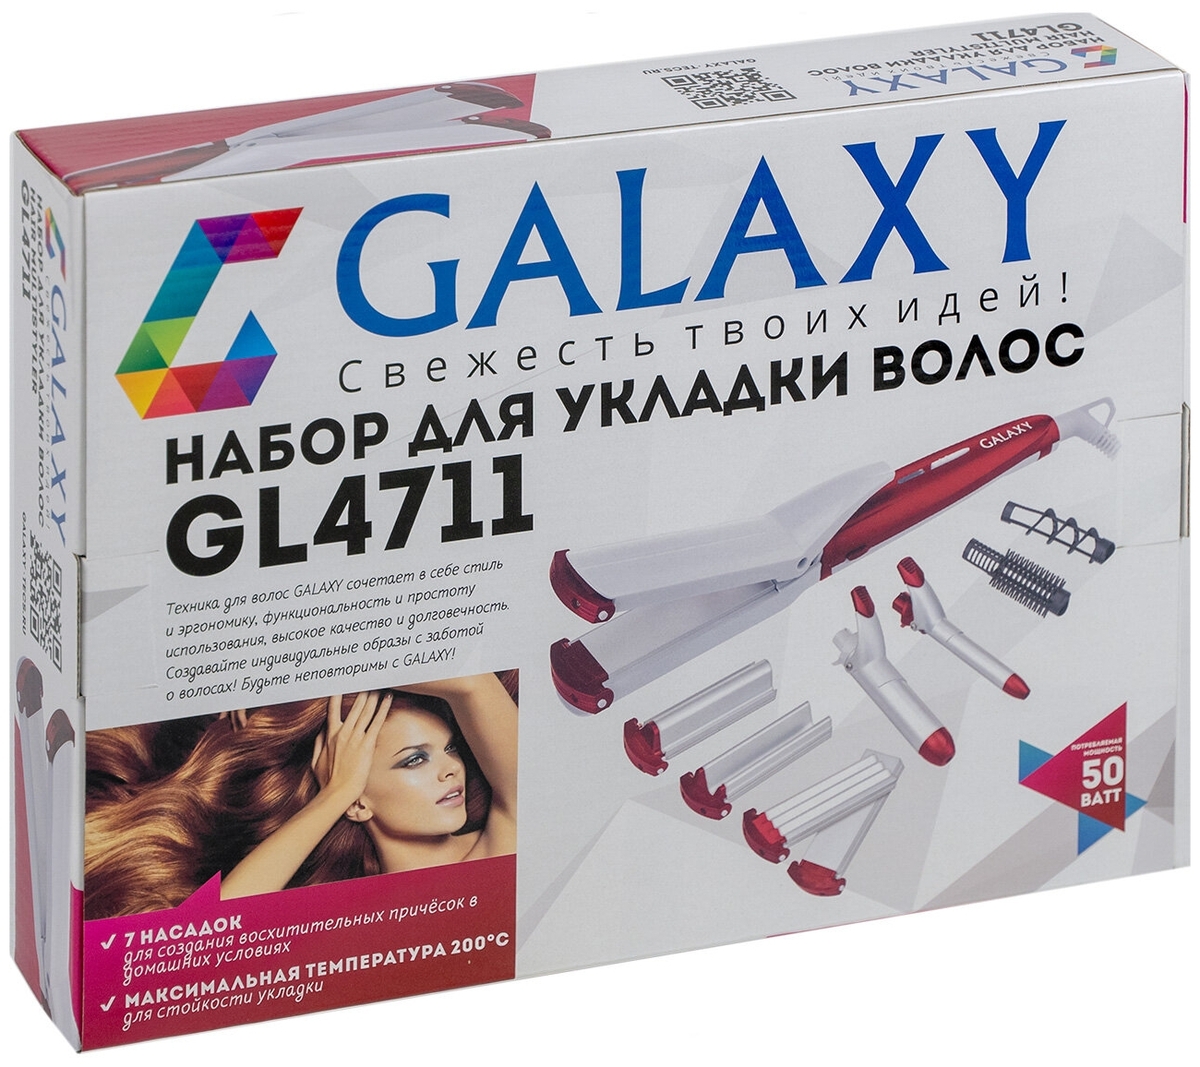 Цена Стайлер GALAXY GL 4711